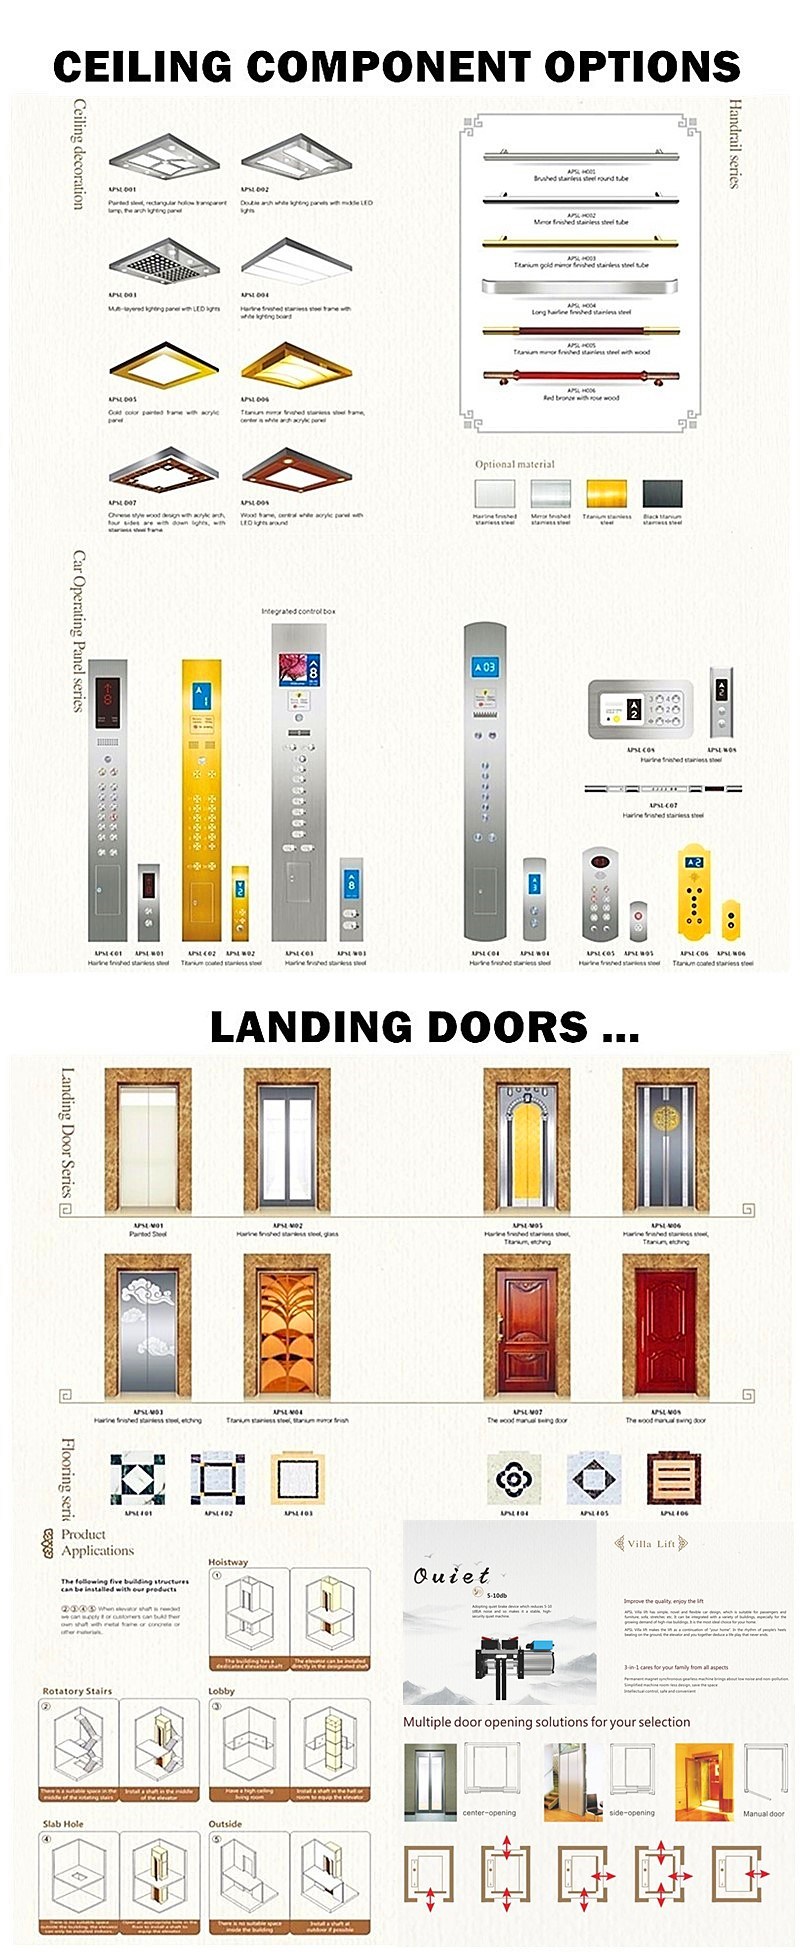 APSL manufacturer Manual Door Home Passenger Villa Lift Elevator